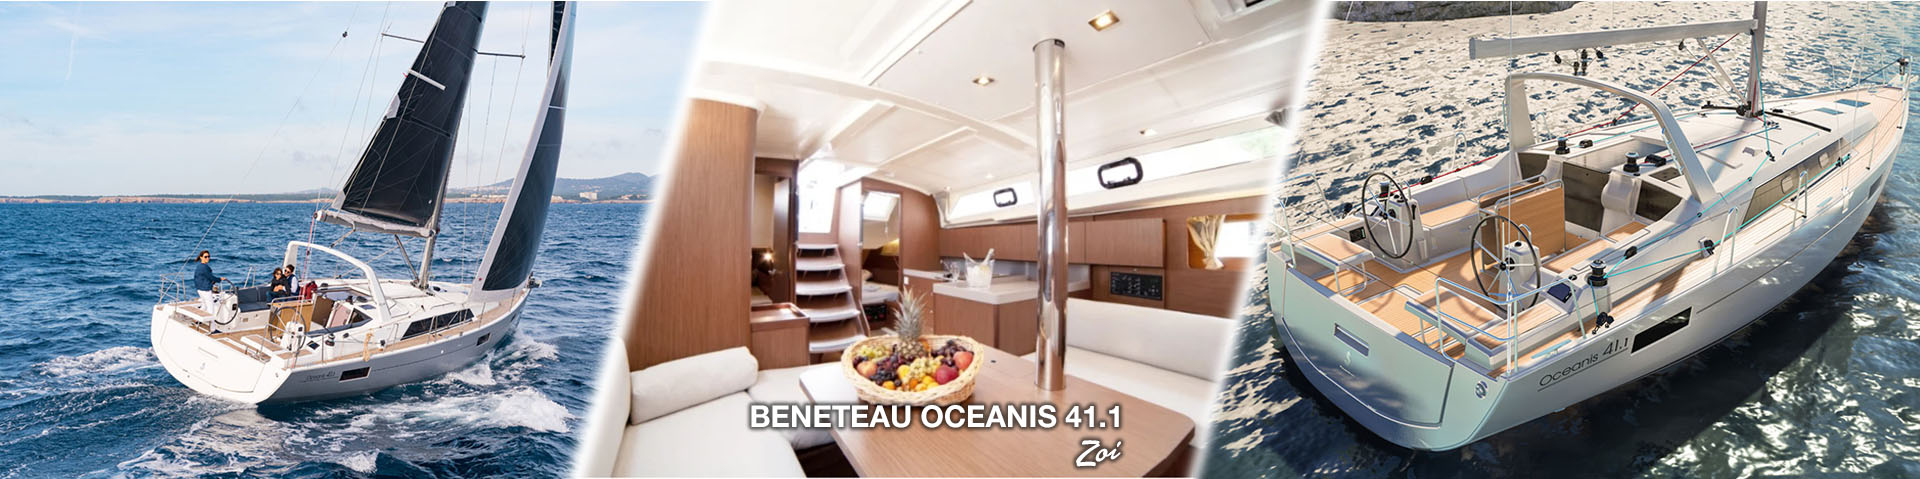 Zoi beneteau oceanis 41.1 yacht charter